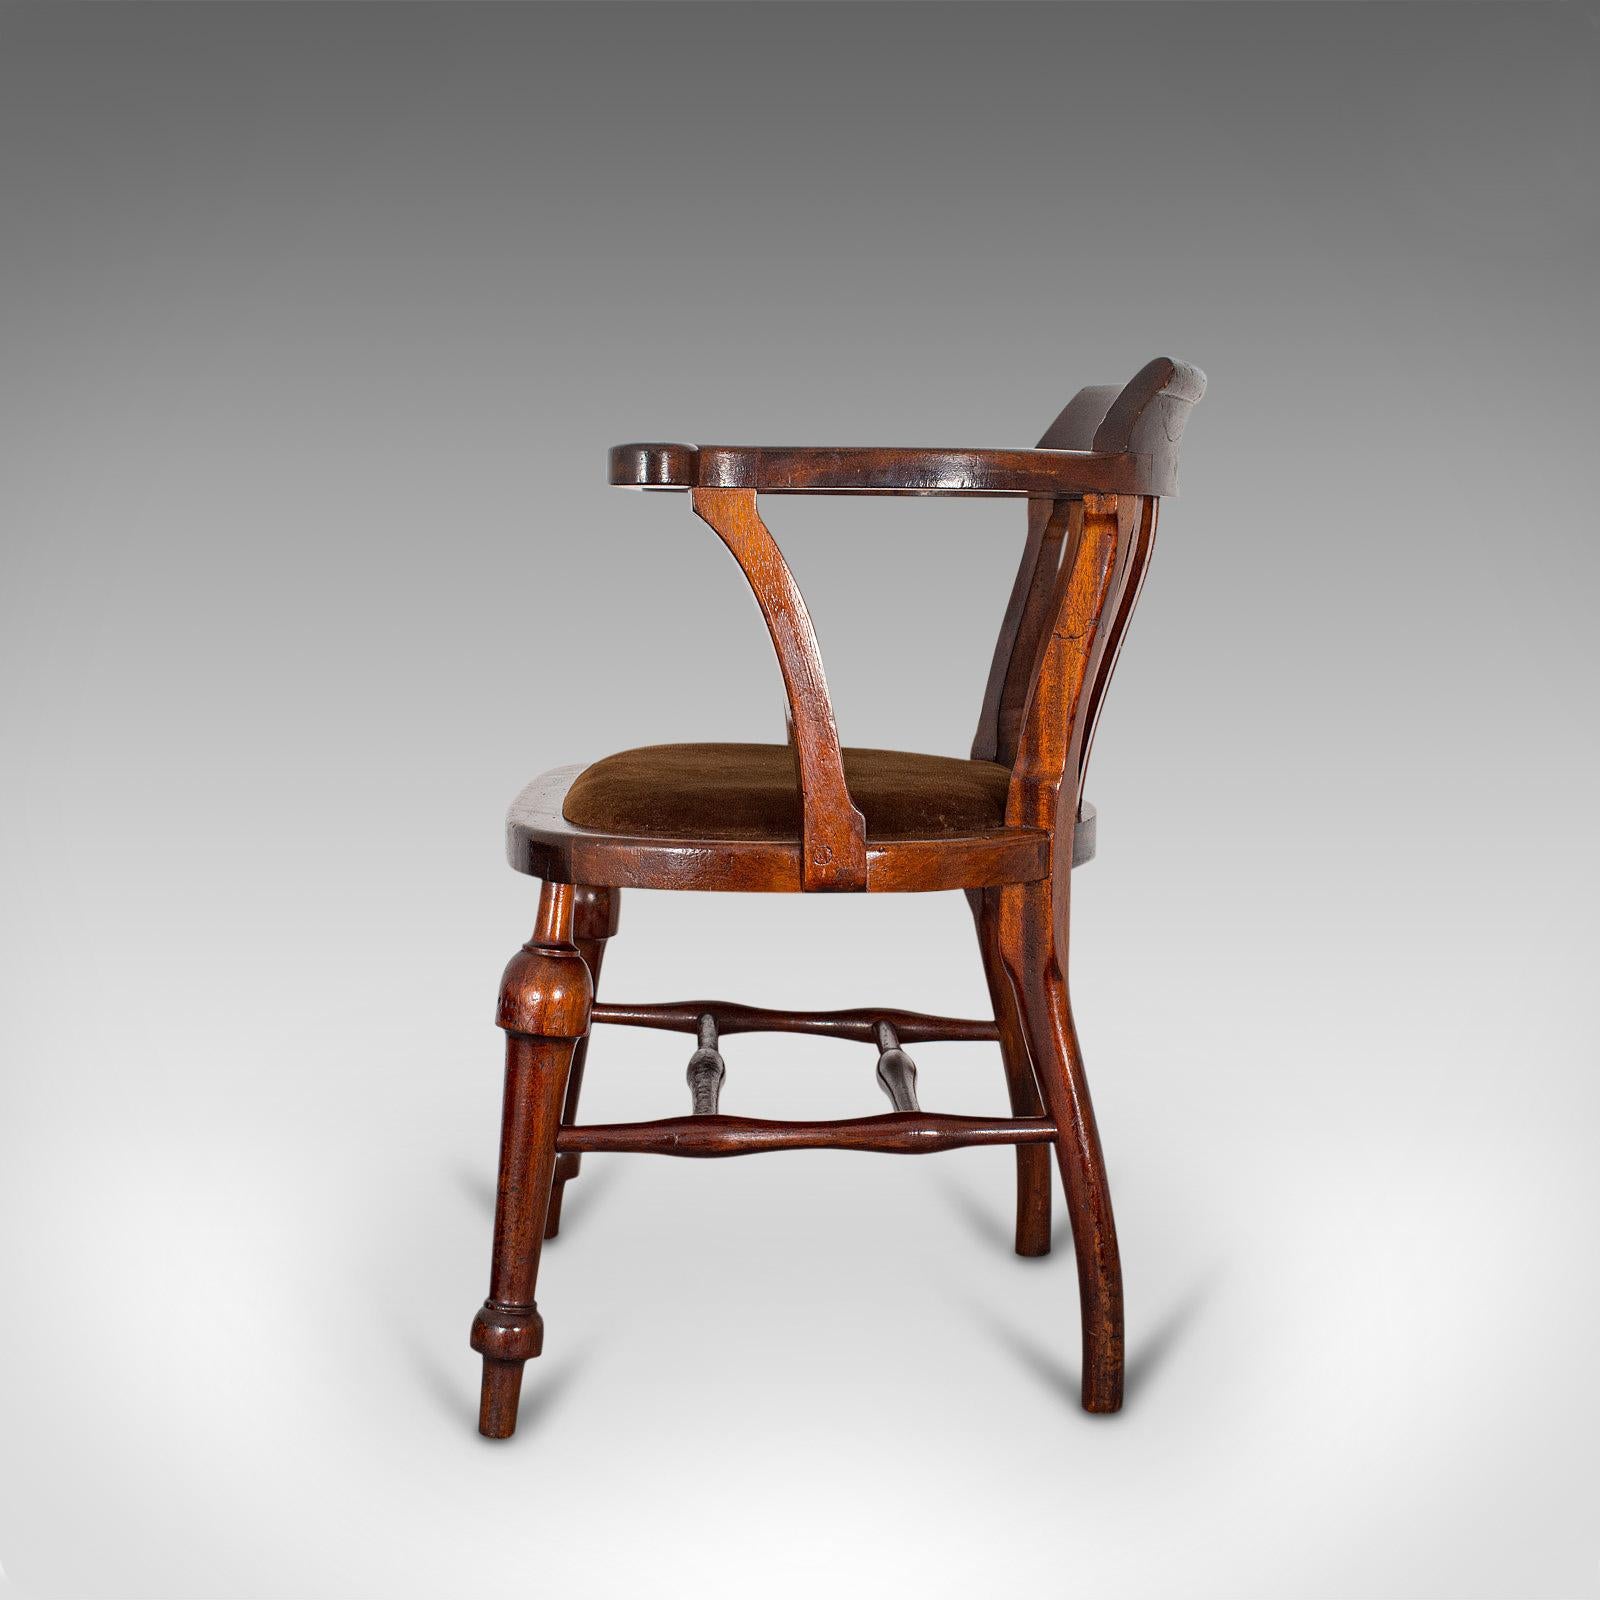 20th Century Antique Captain's Chair, English, Mahogany, Armchair, Seat, Edwardian circa 1910